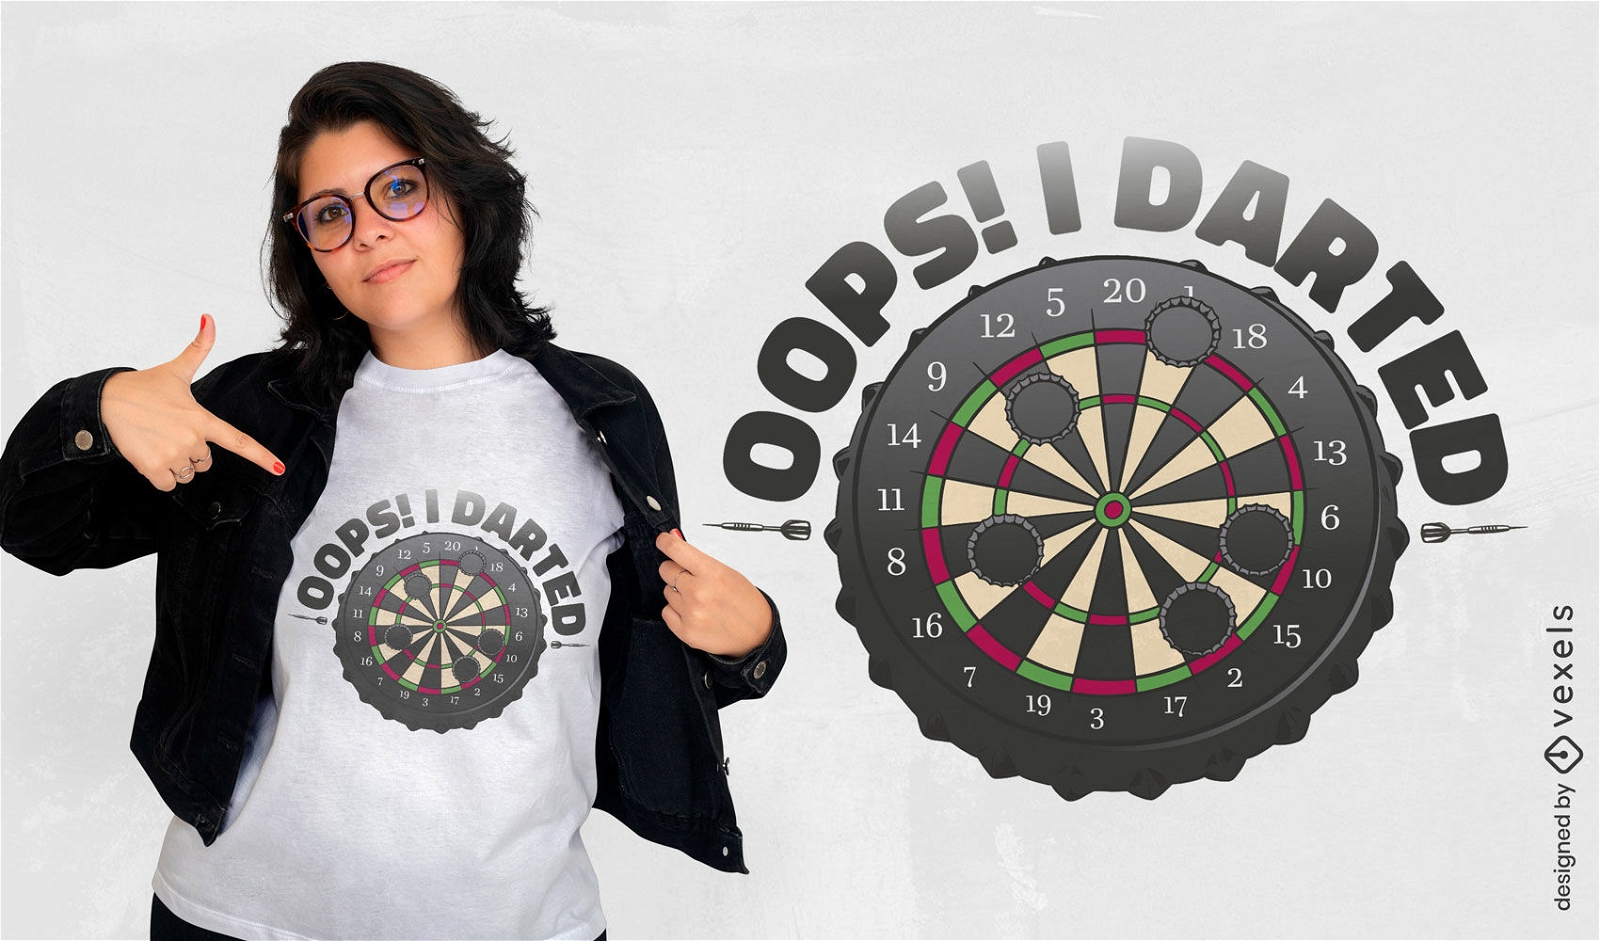 Funny dartboard game t-shirt design